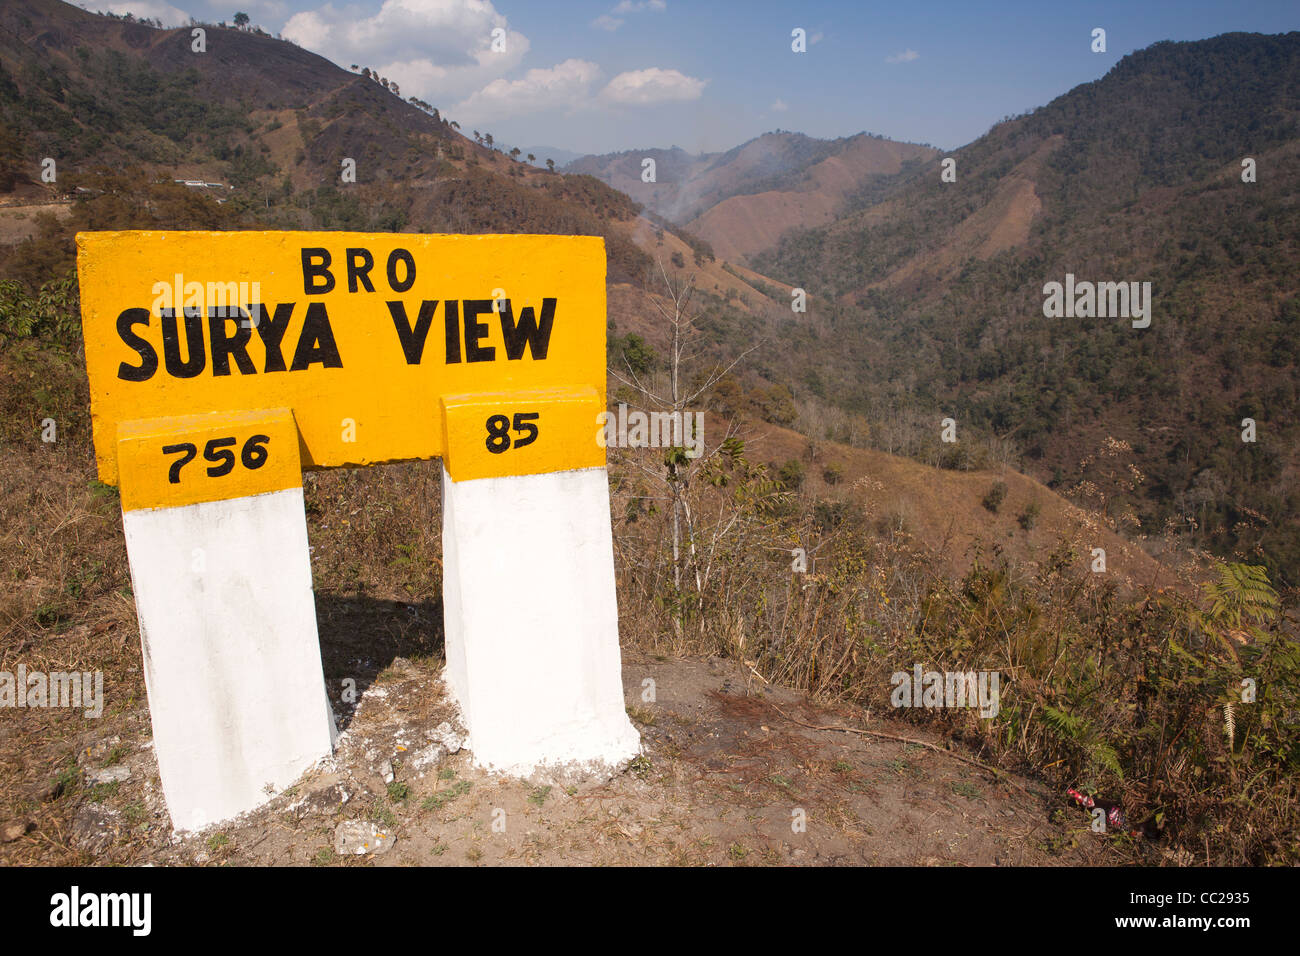 India, Arunachal Pradesh, Lower Subansiri district, Border Roads Agency Surya View sign at sunrise viewpoint Stock Photo